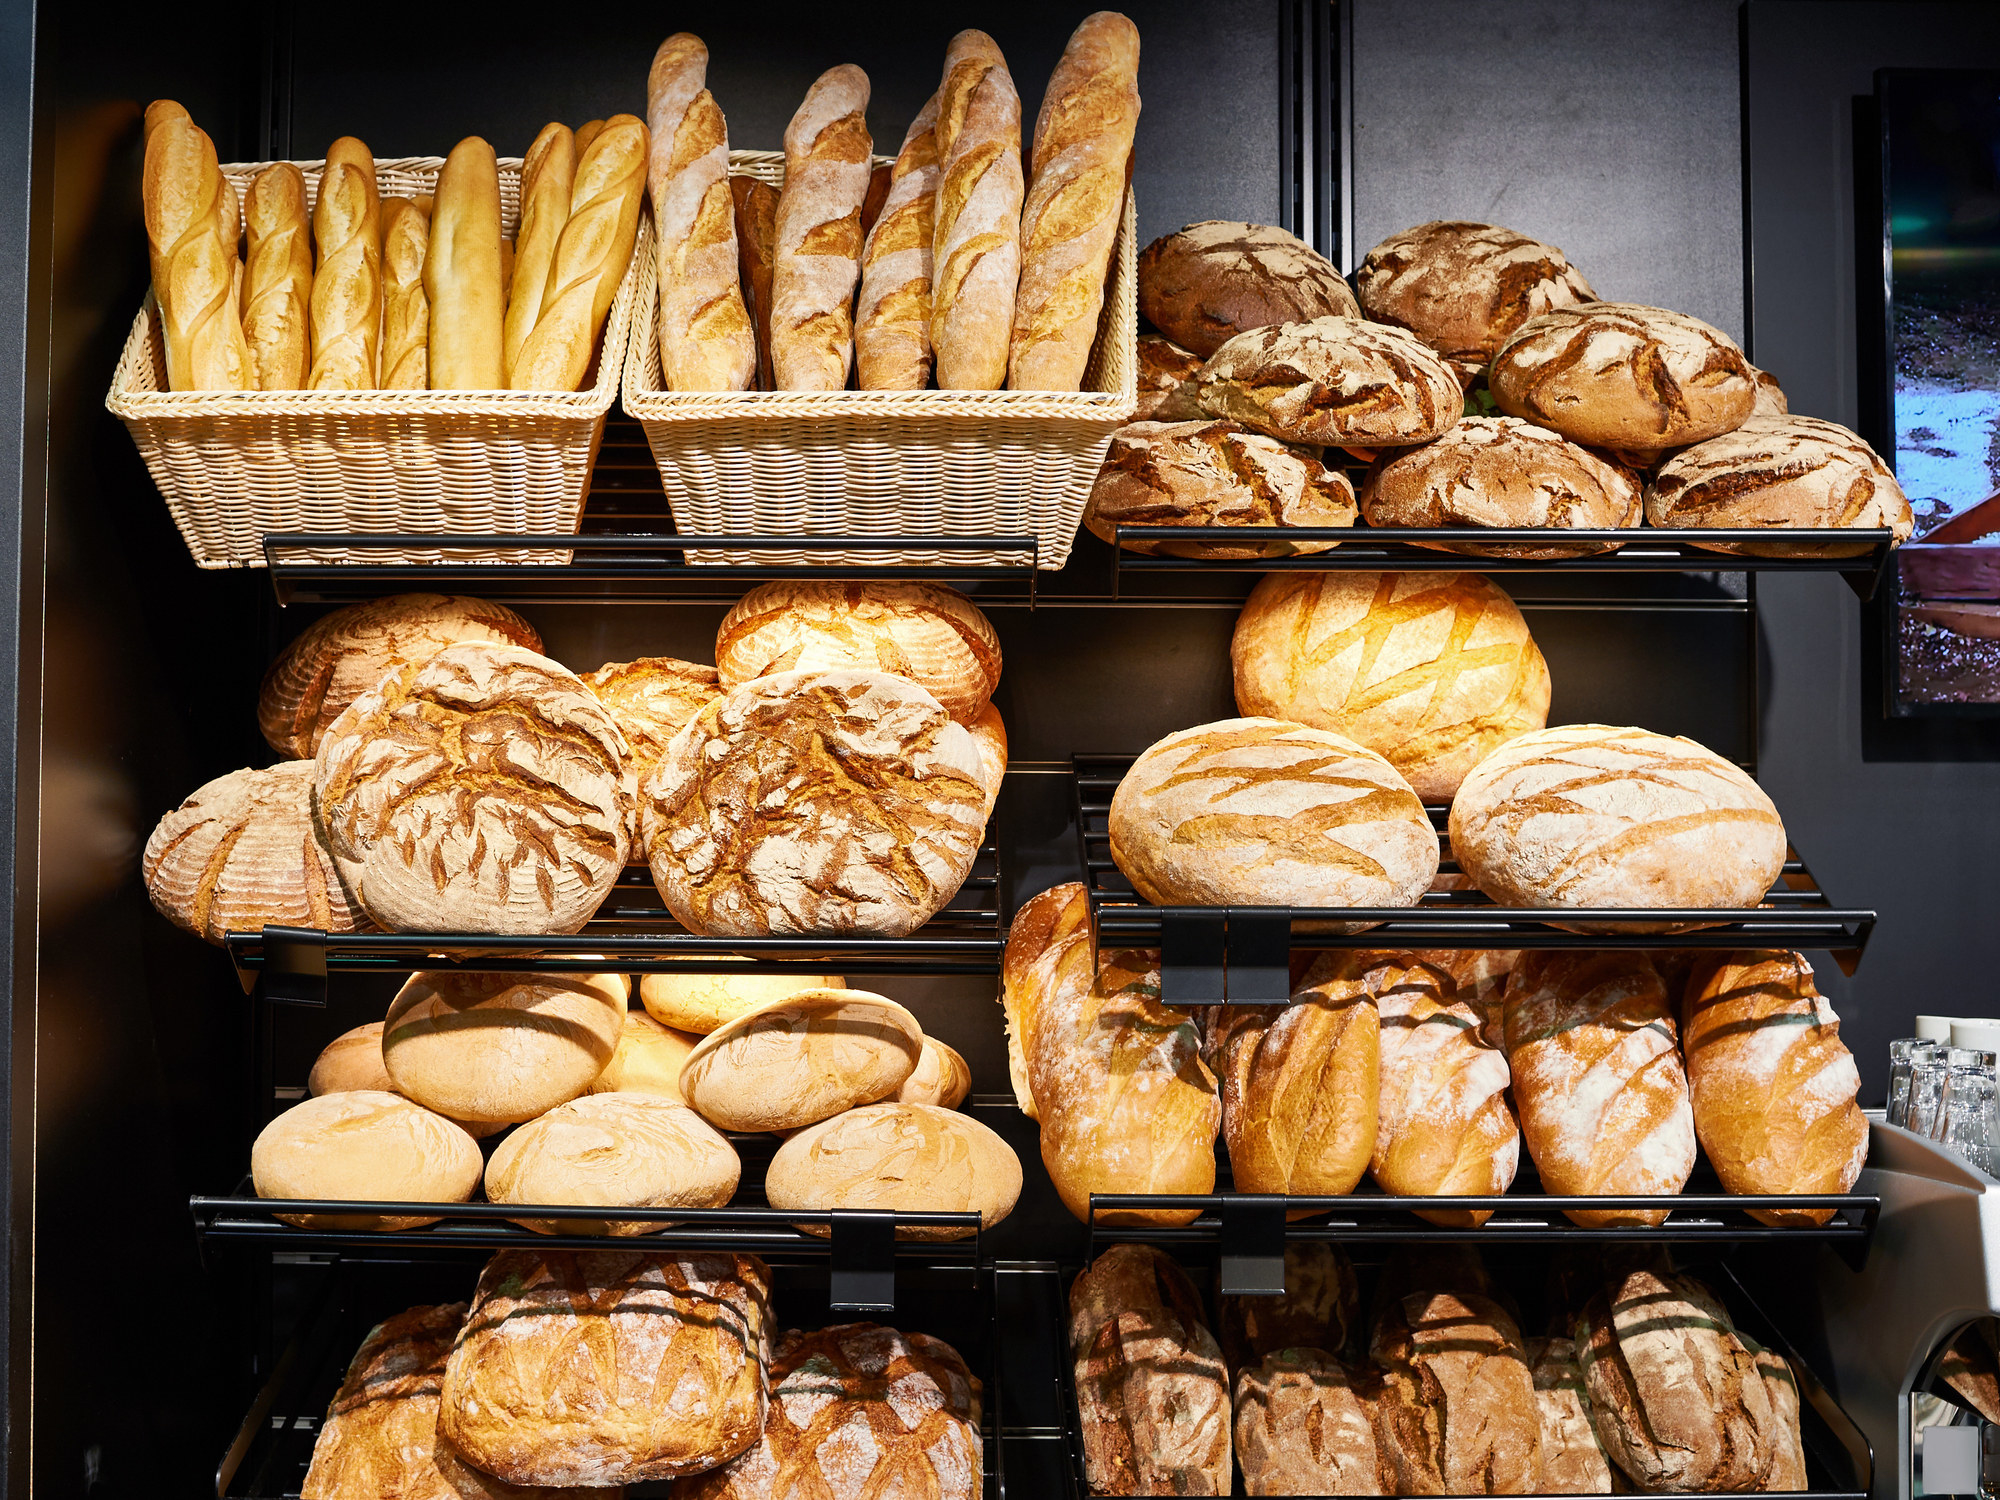 A bread display